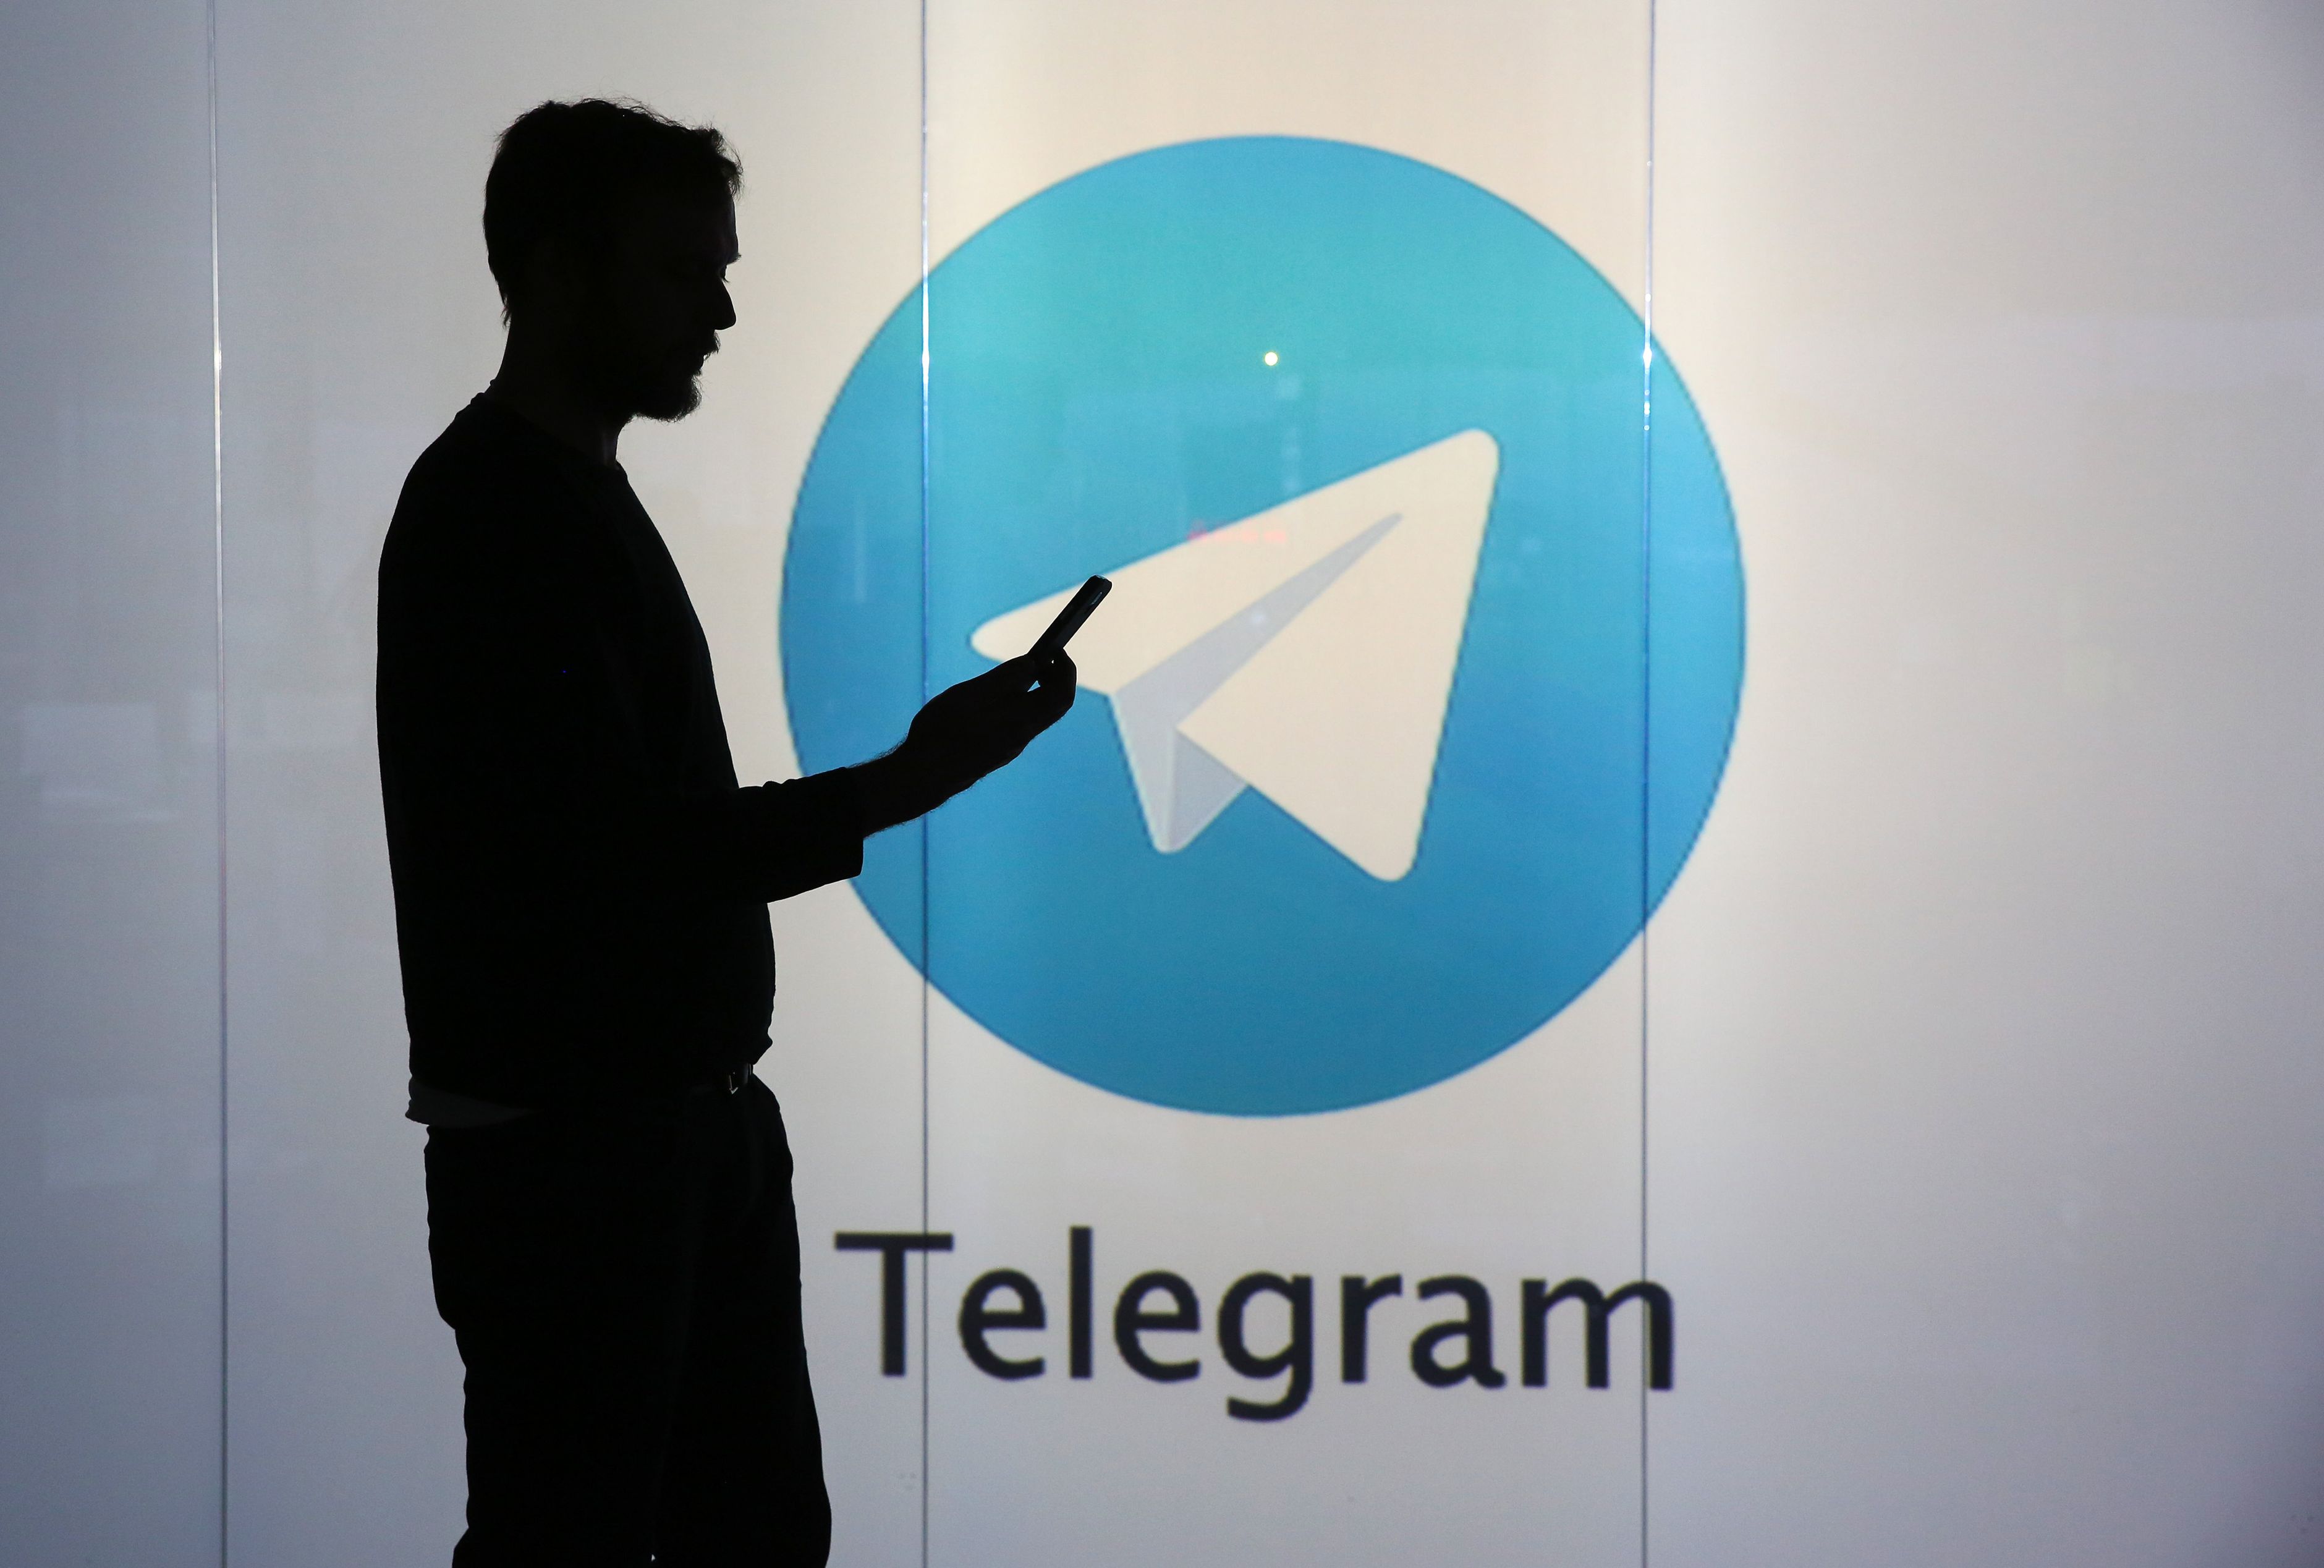 Group telegram russia